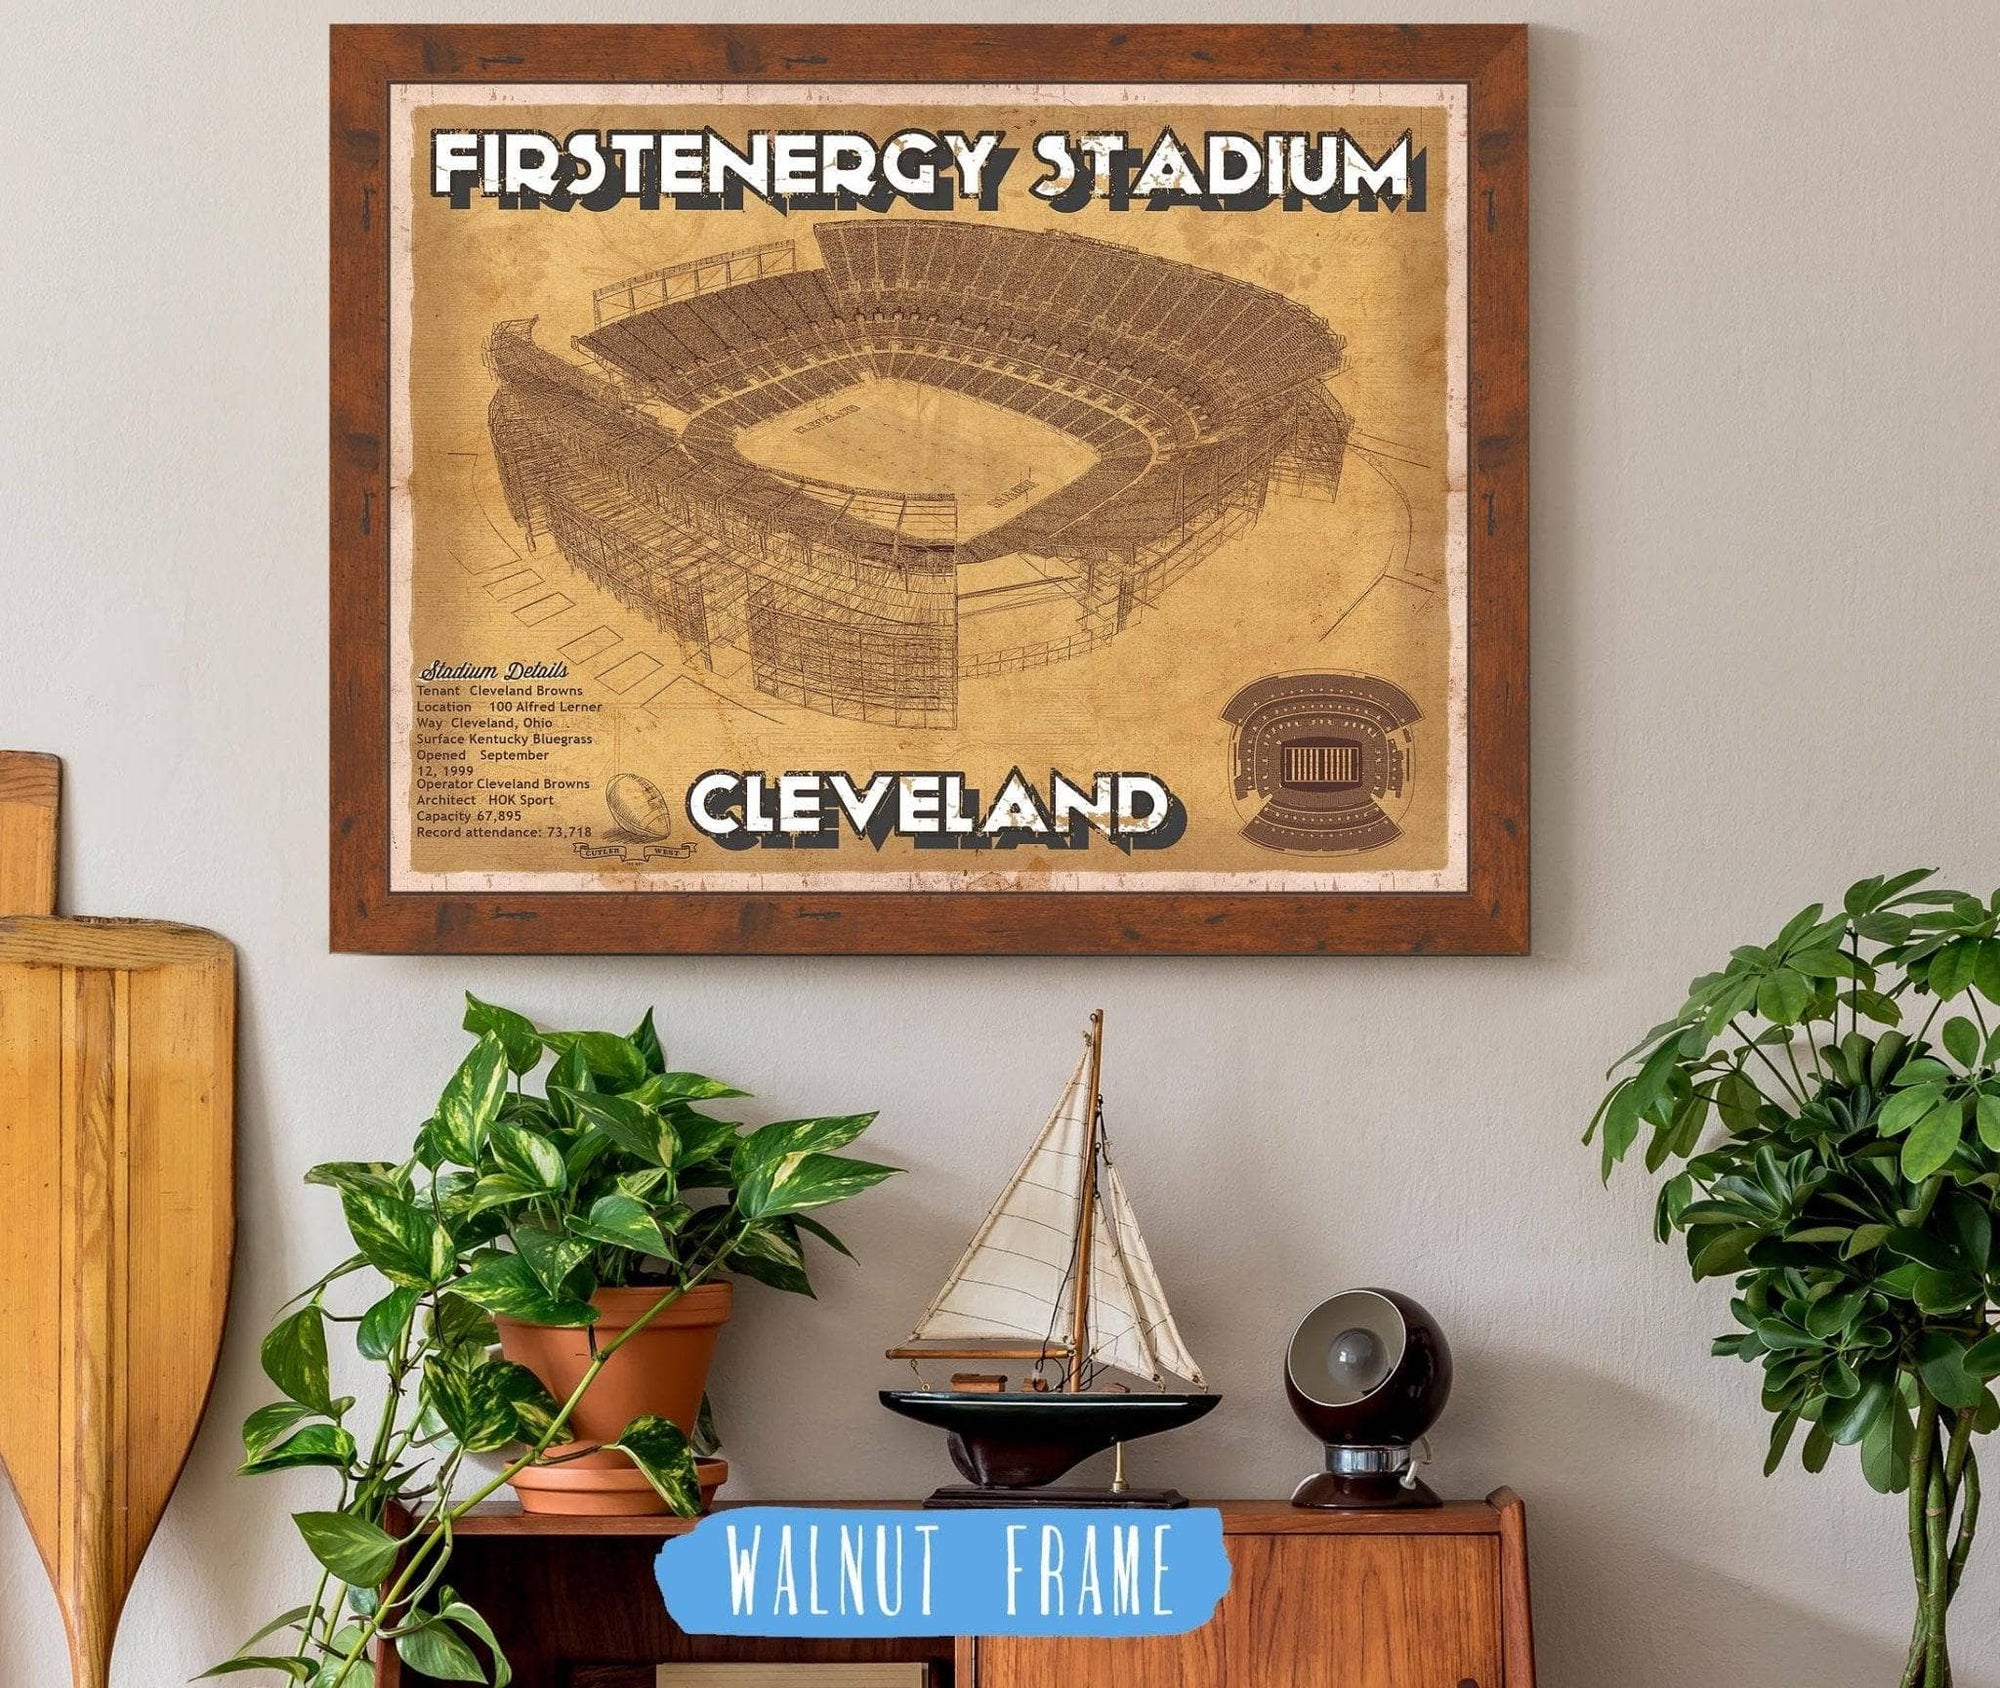 Cutler West Pro Football Collection 14" x 11" / Walnut Frame Cleveland Browns FirstEnergy Stadium - Vintage Football Print 698892938_60224